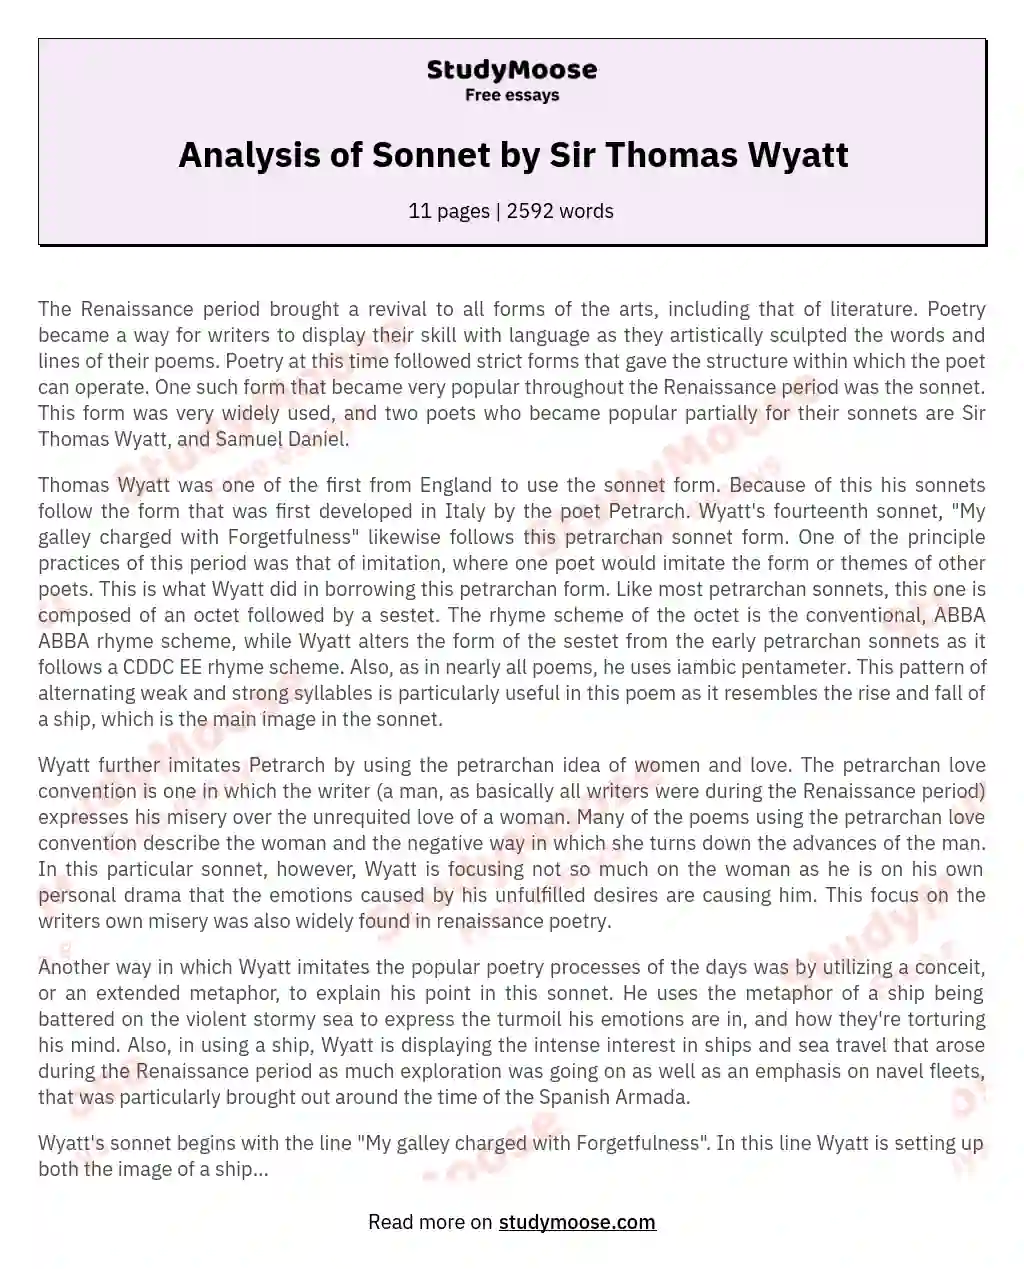 Analysis of Sonnet by Sir Thomas Wyatt essay